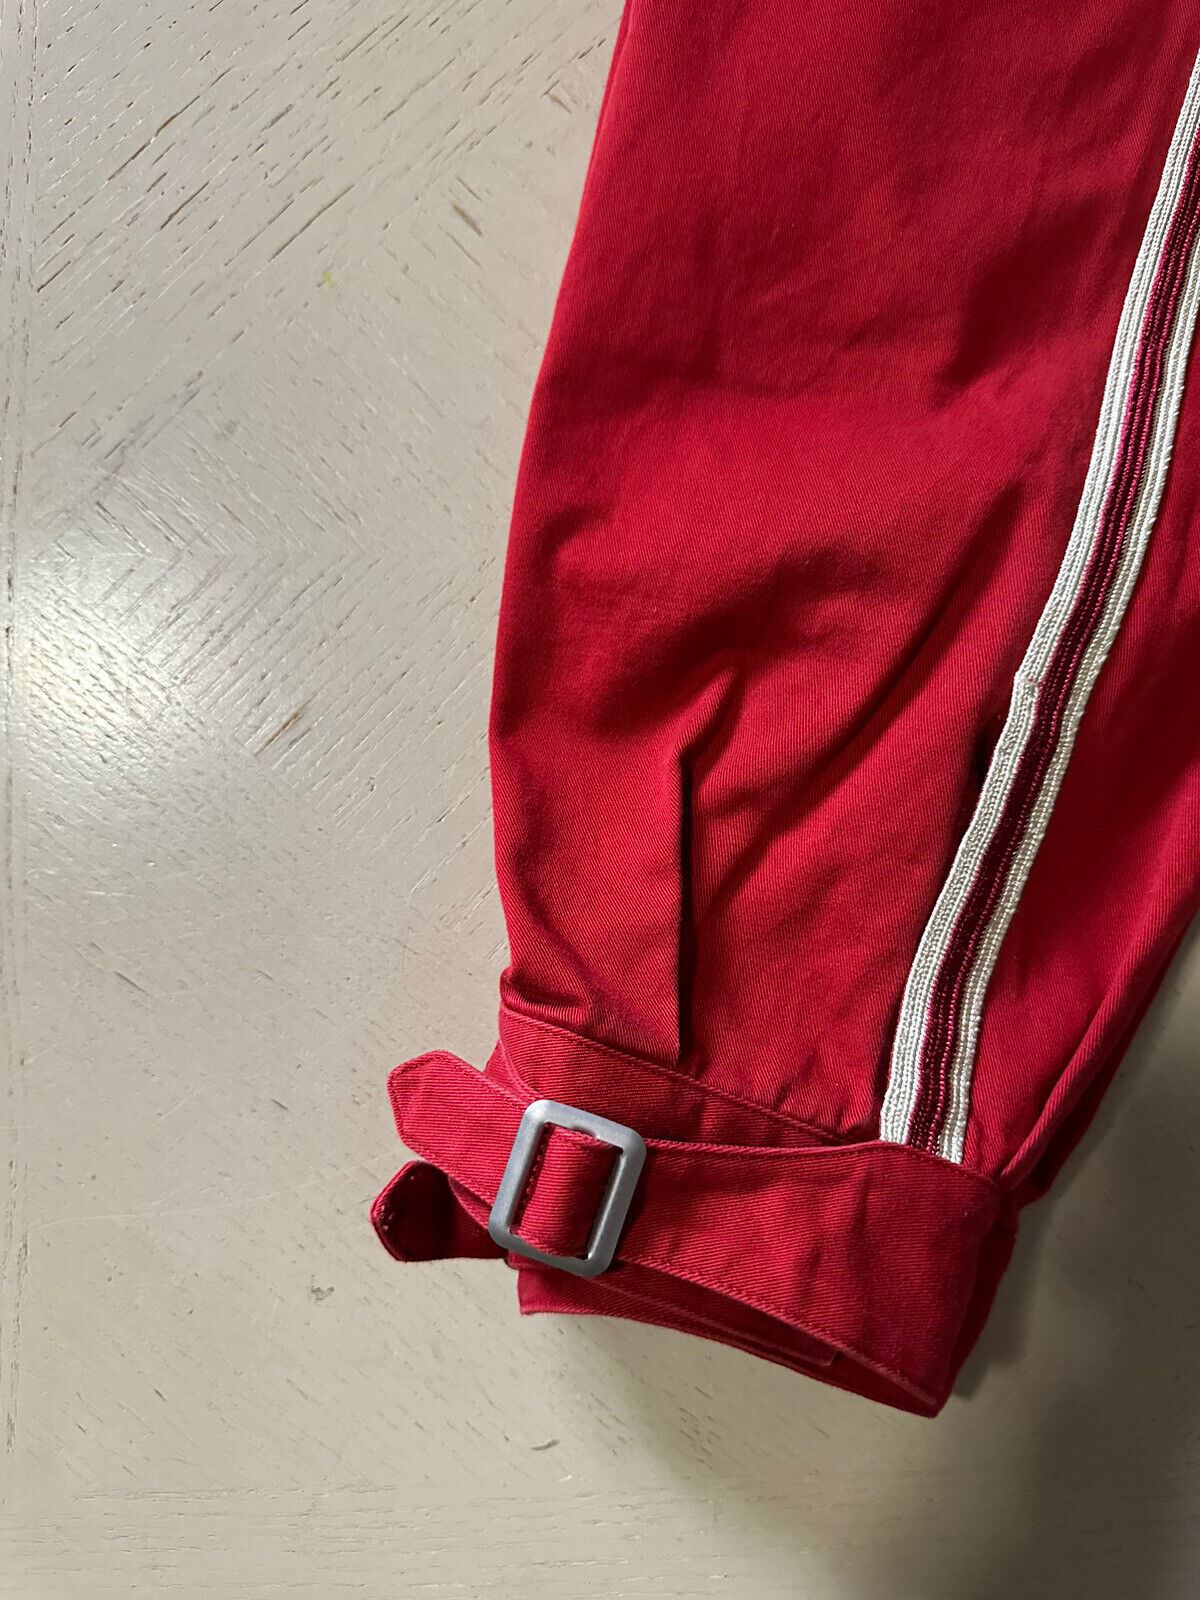 Neue 1300 $ Gucci Herren-Jogginghose aus Militärbaumwolle, Rot, 32 US/48 Eu